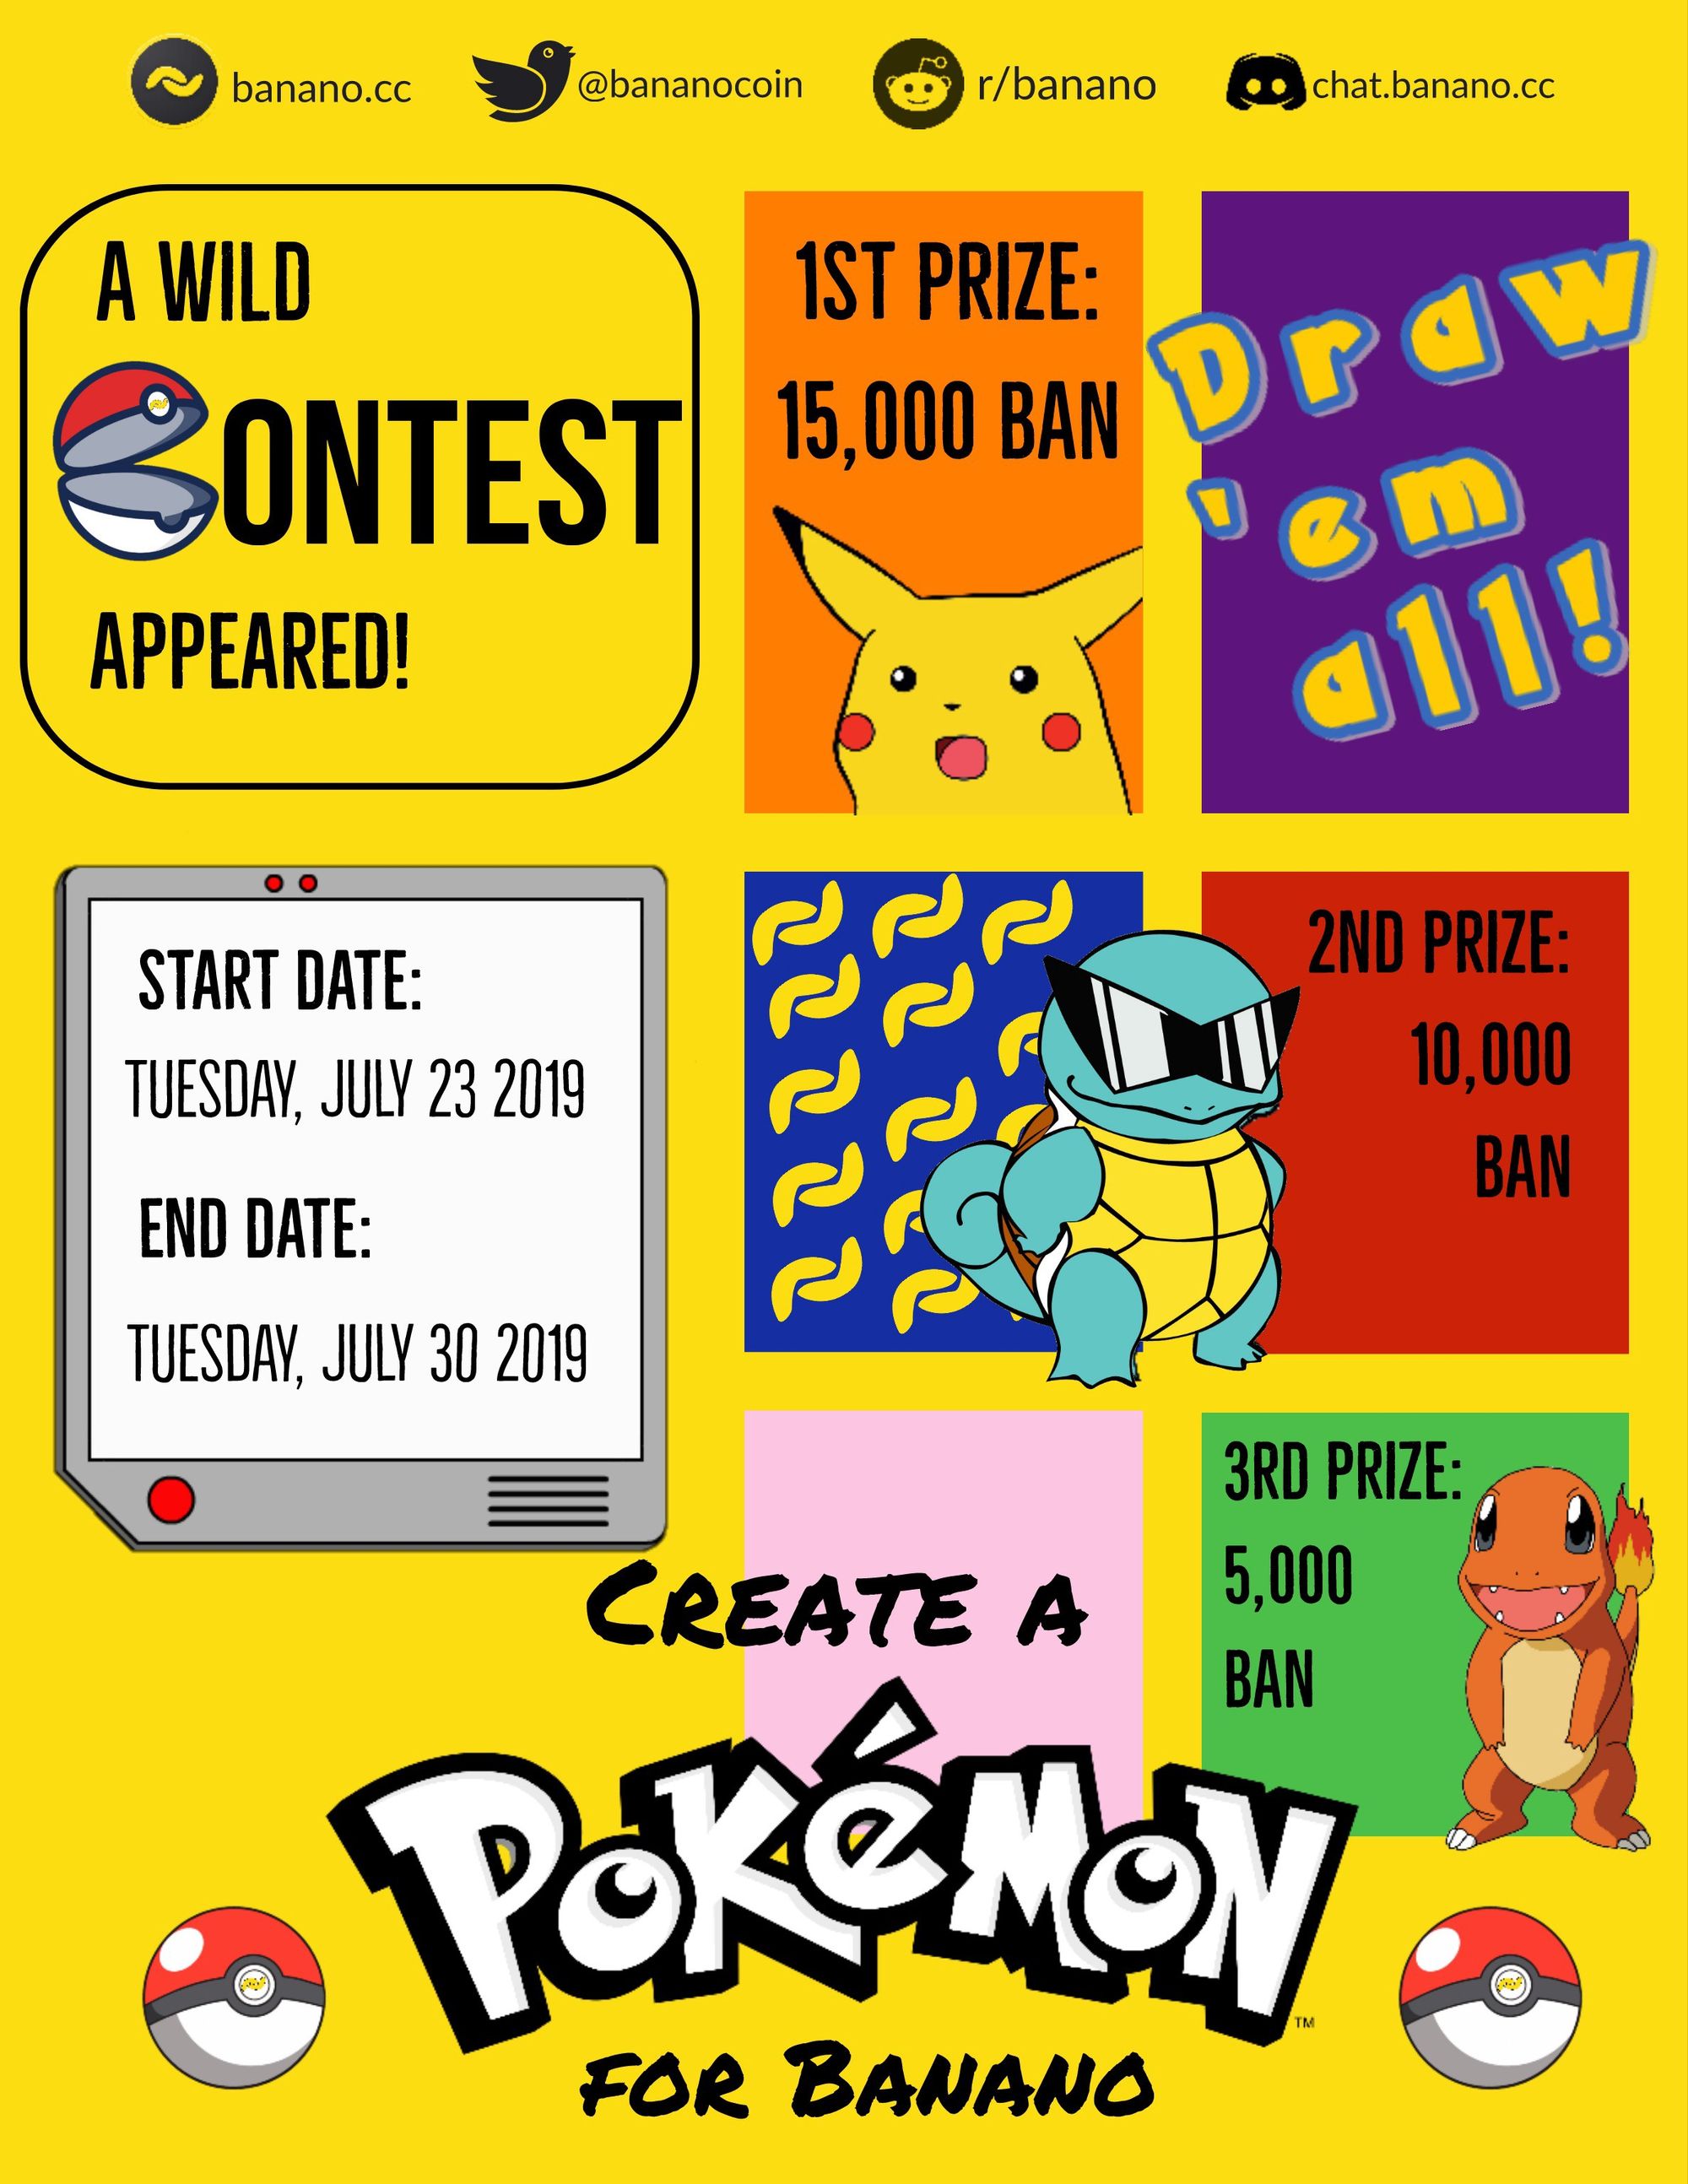 A Wild Crypto Contest Appeared! Create a Pokémon for BANANO!